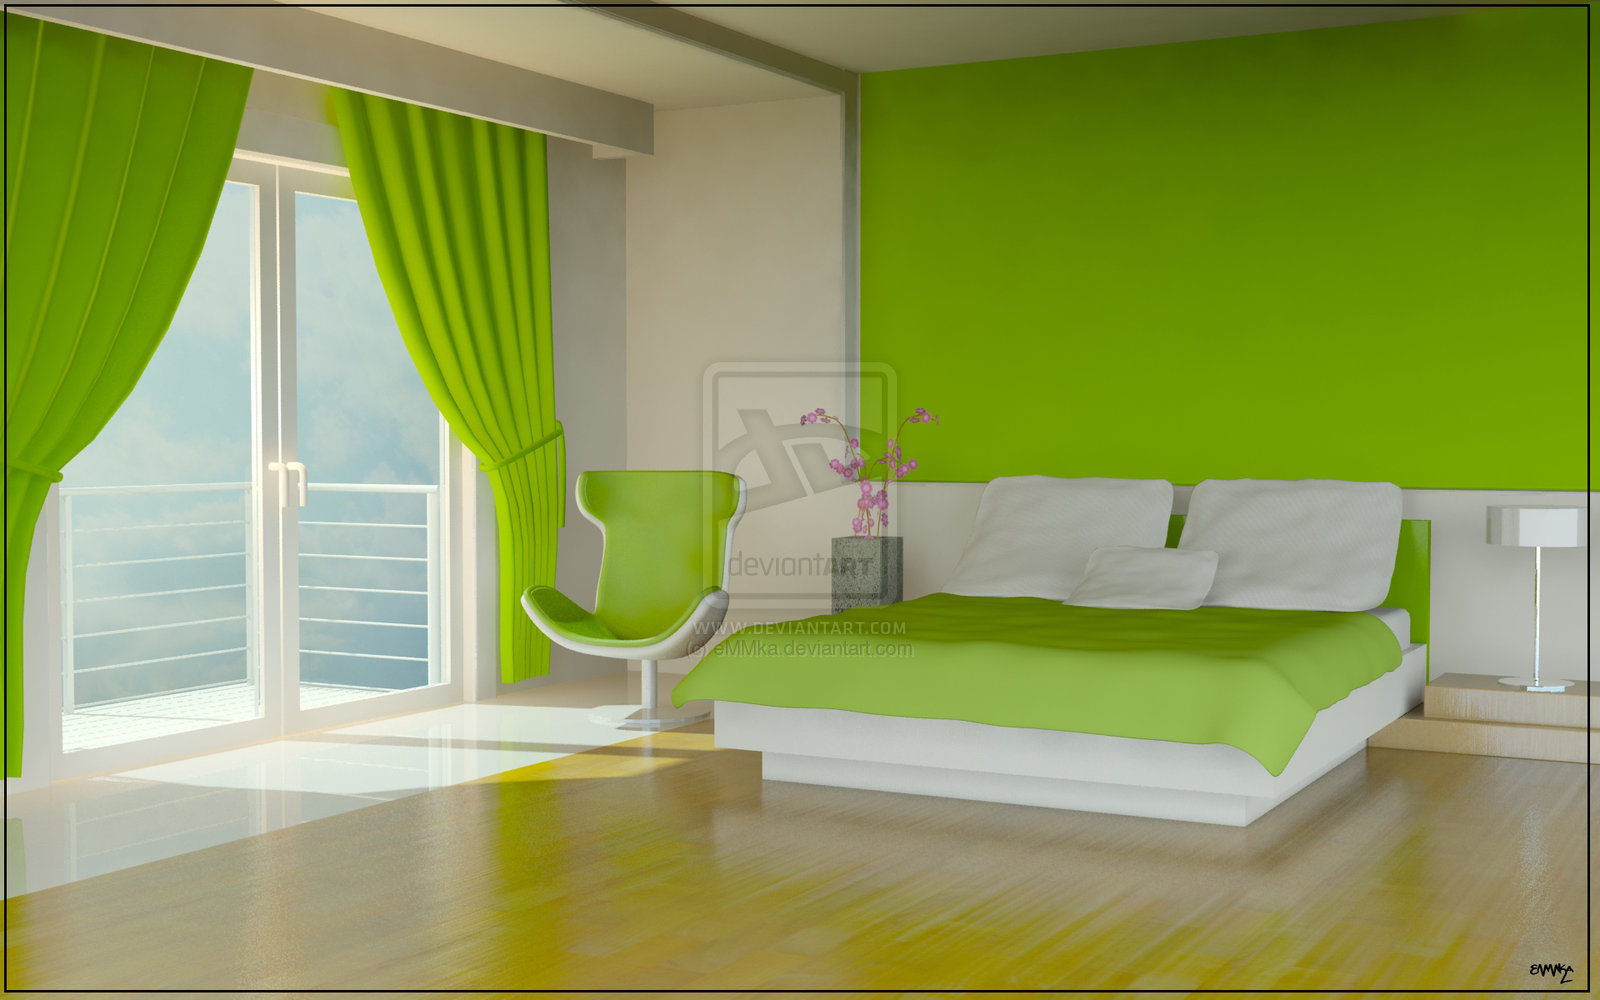 green interior design